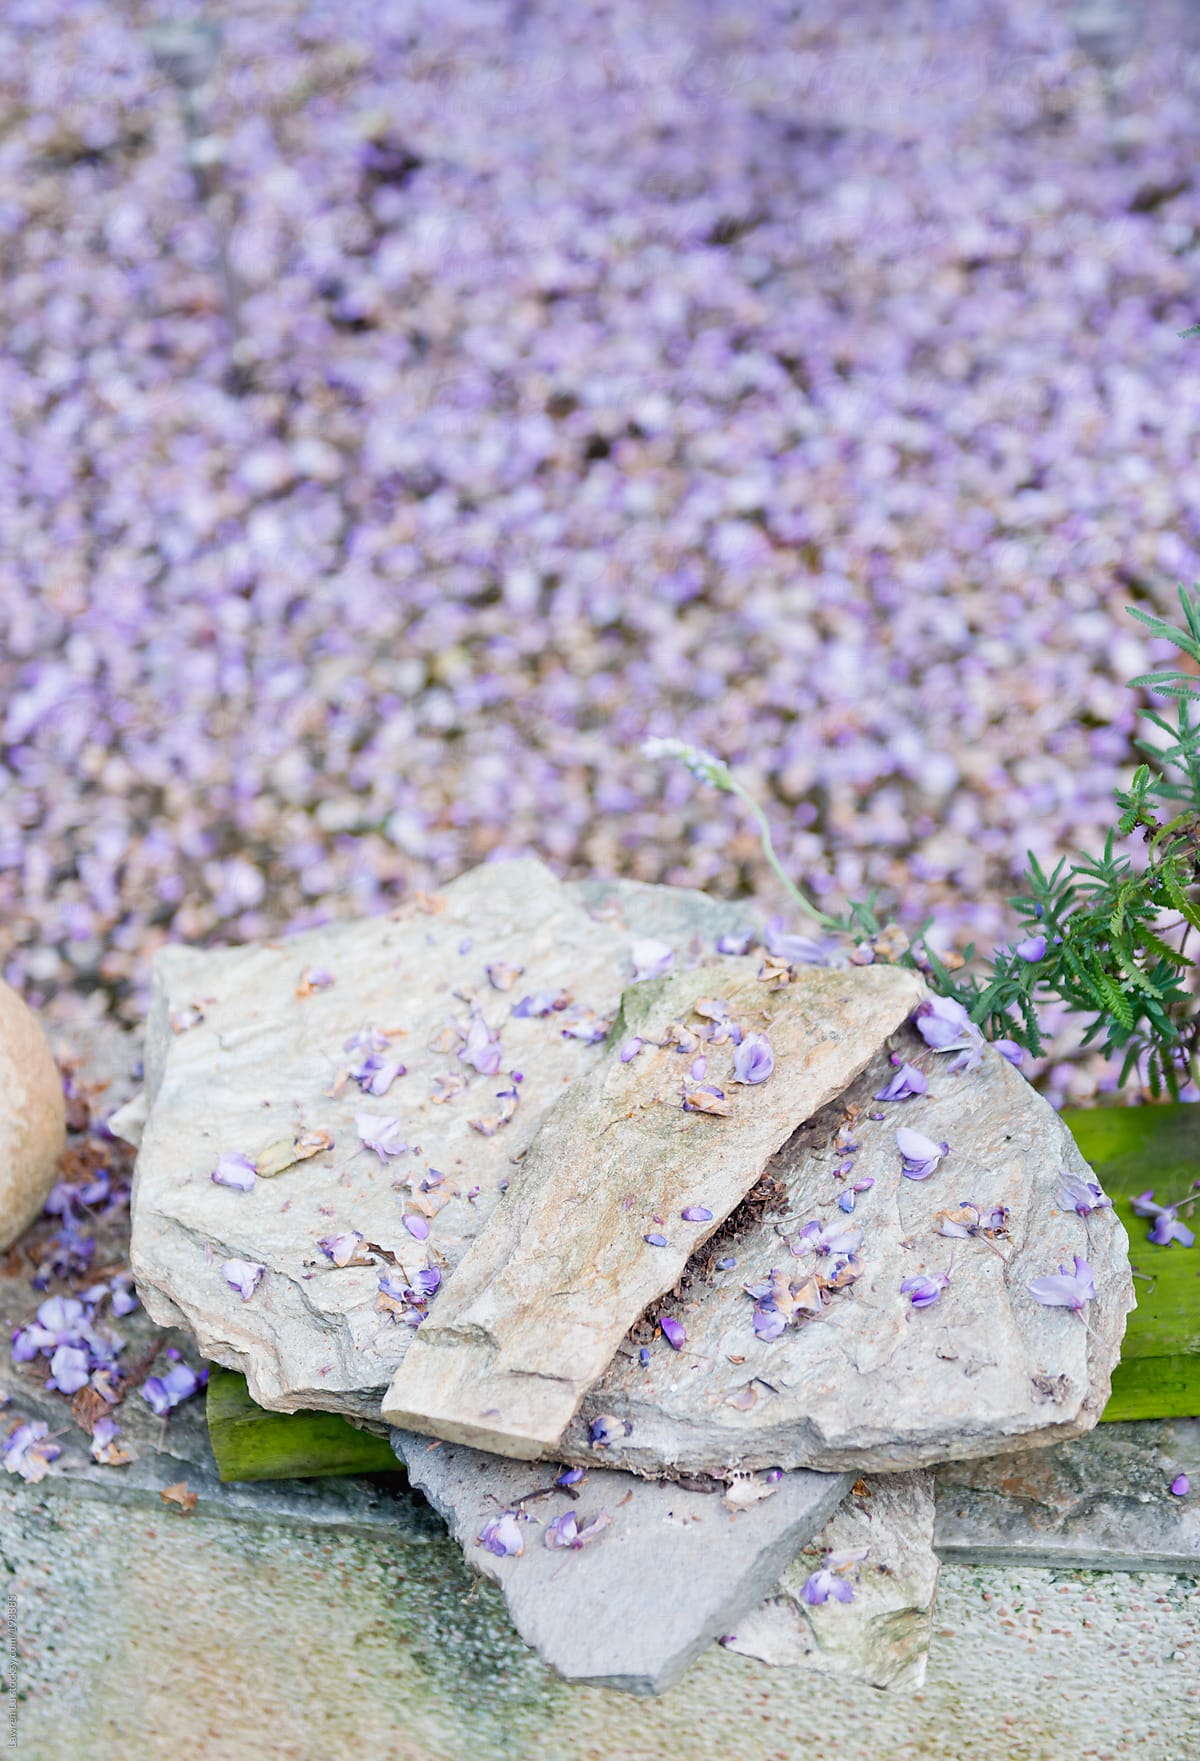 Rocks with purple petals